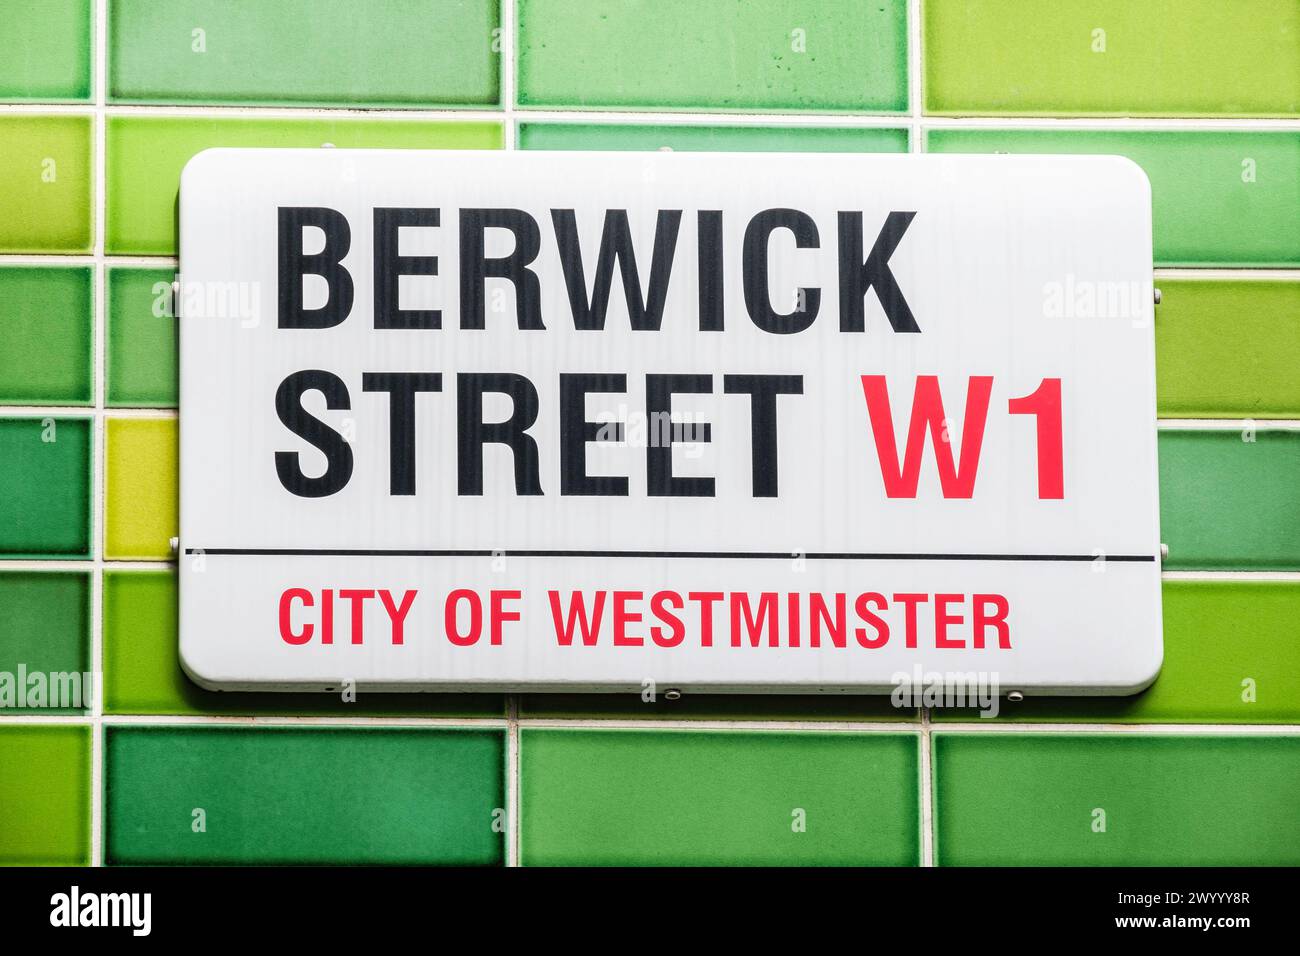 Indicazioni stradali per Londra: Berwick Street W1 Foto Stock